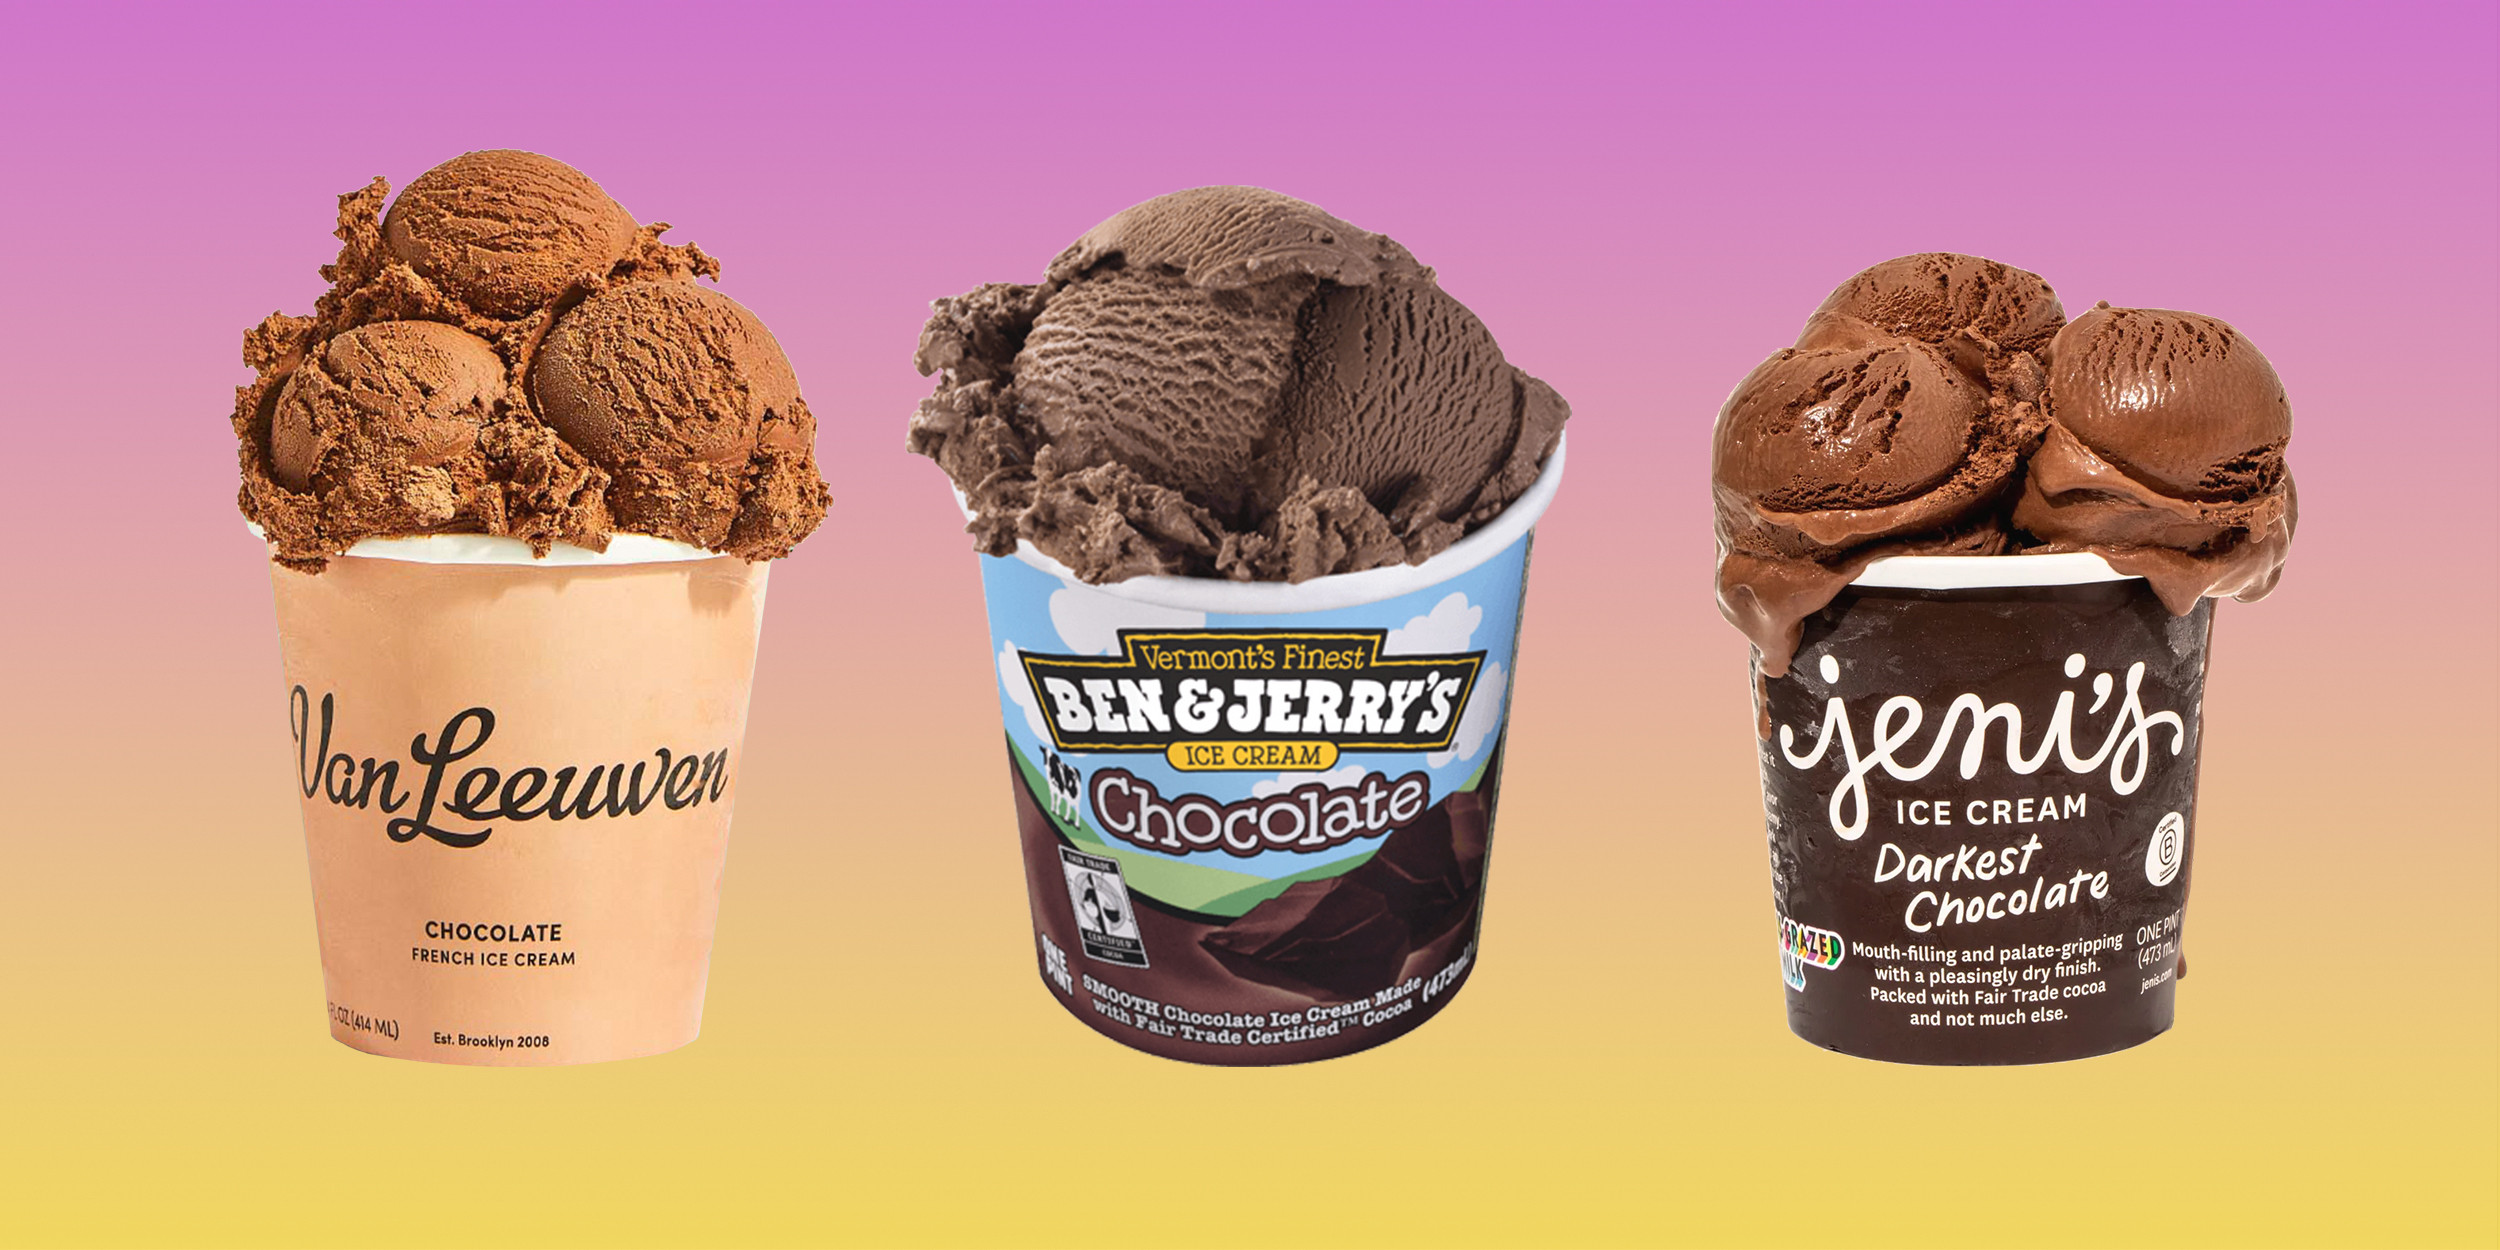 Which Ice Cream Is Best?